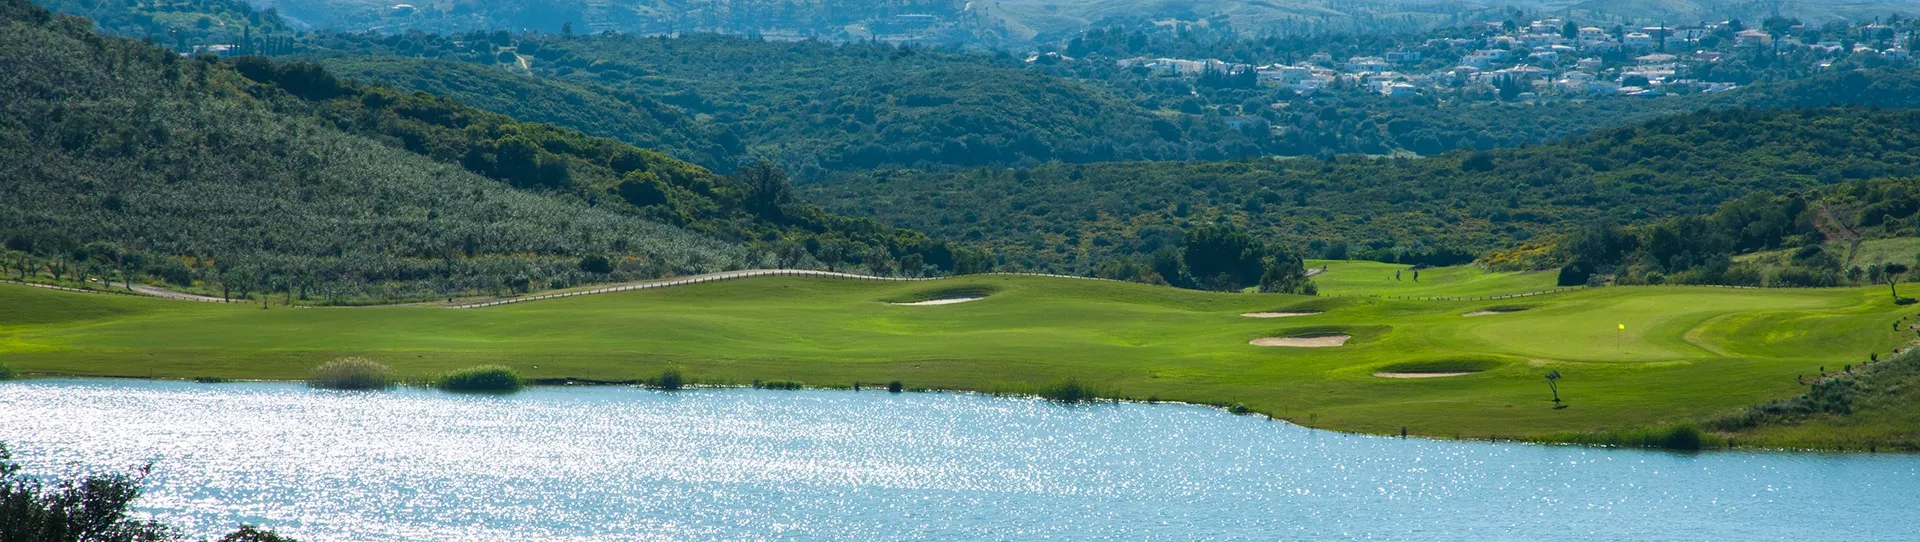 Portugal golf courses - Alamos Golf Course - Photo 2